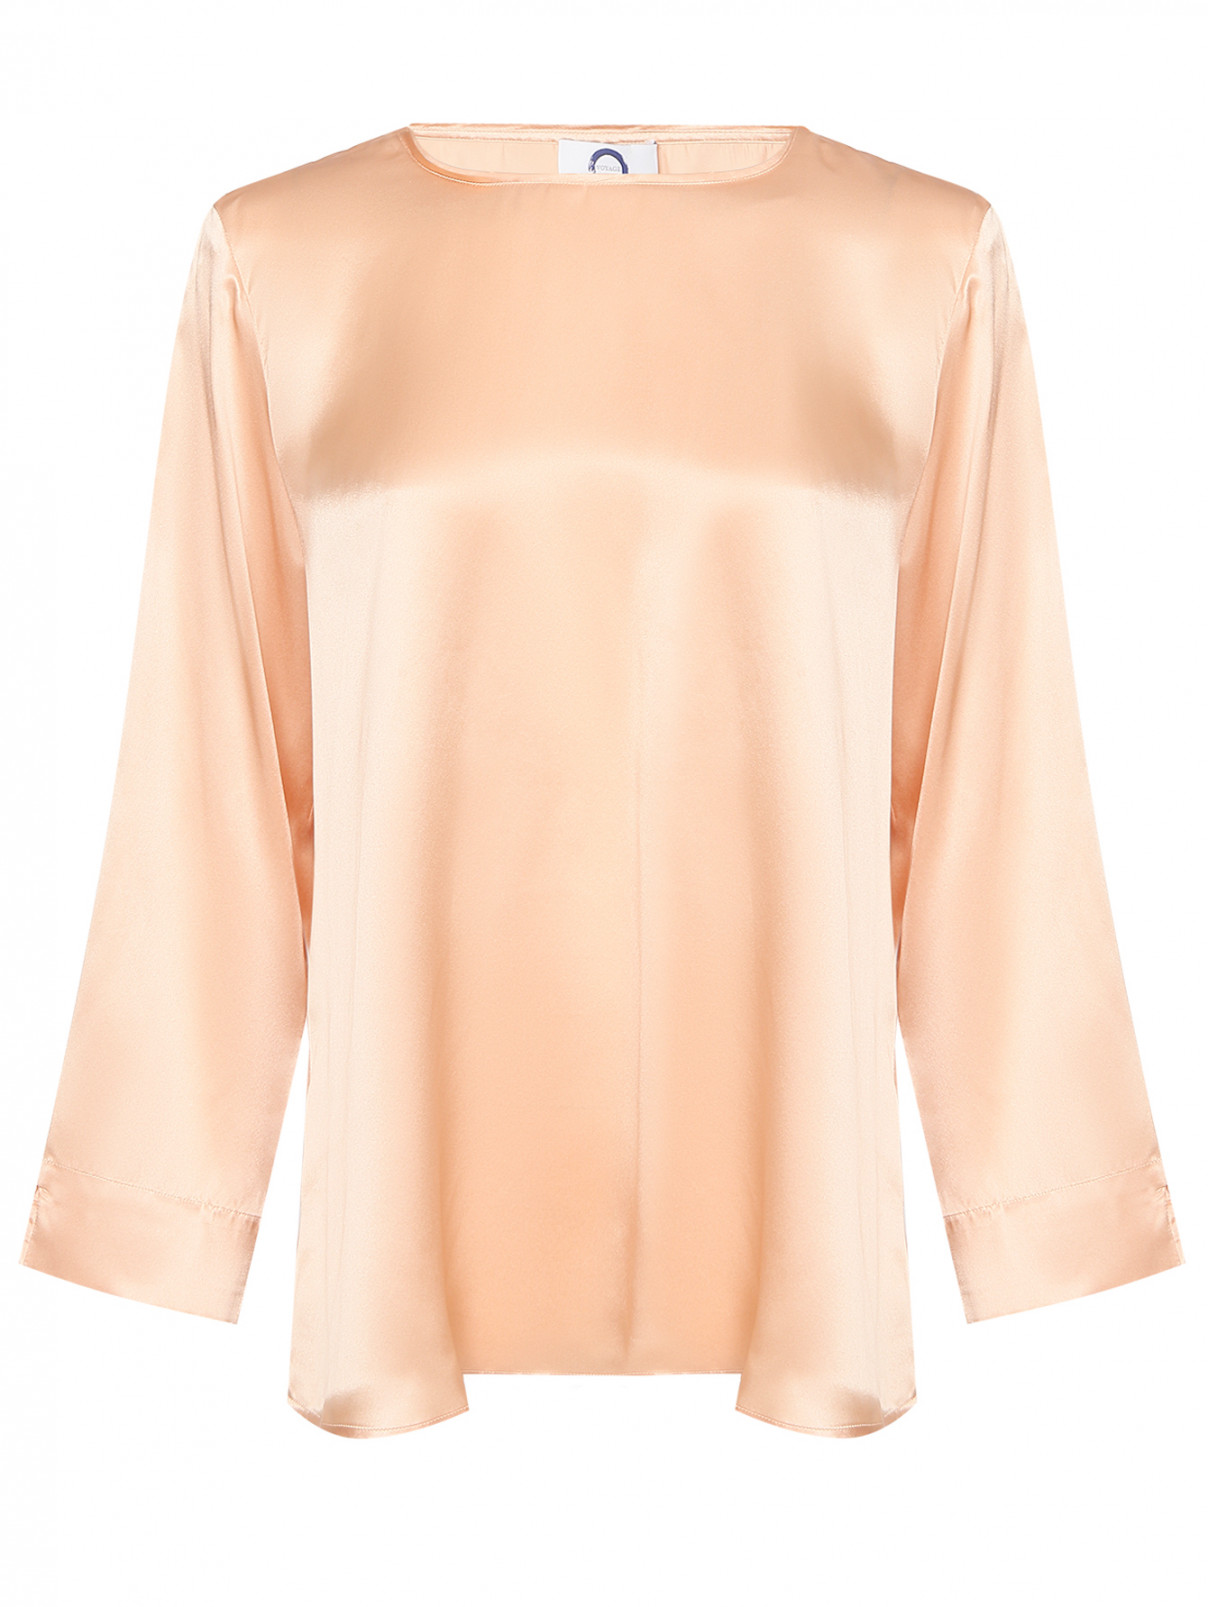 Блуза из шелка Marina Rinaldi  –  Общий вид  – Цвет:  Бежевый